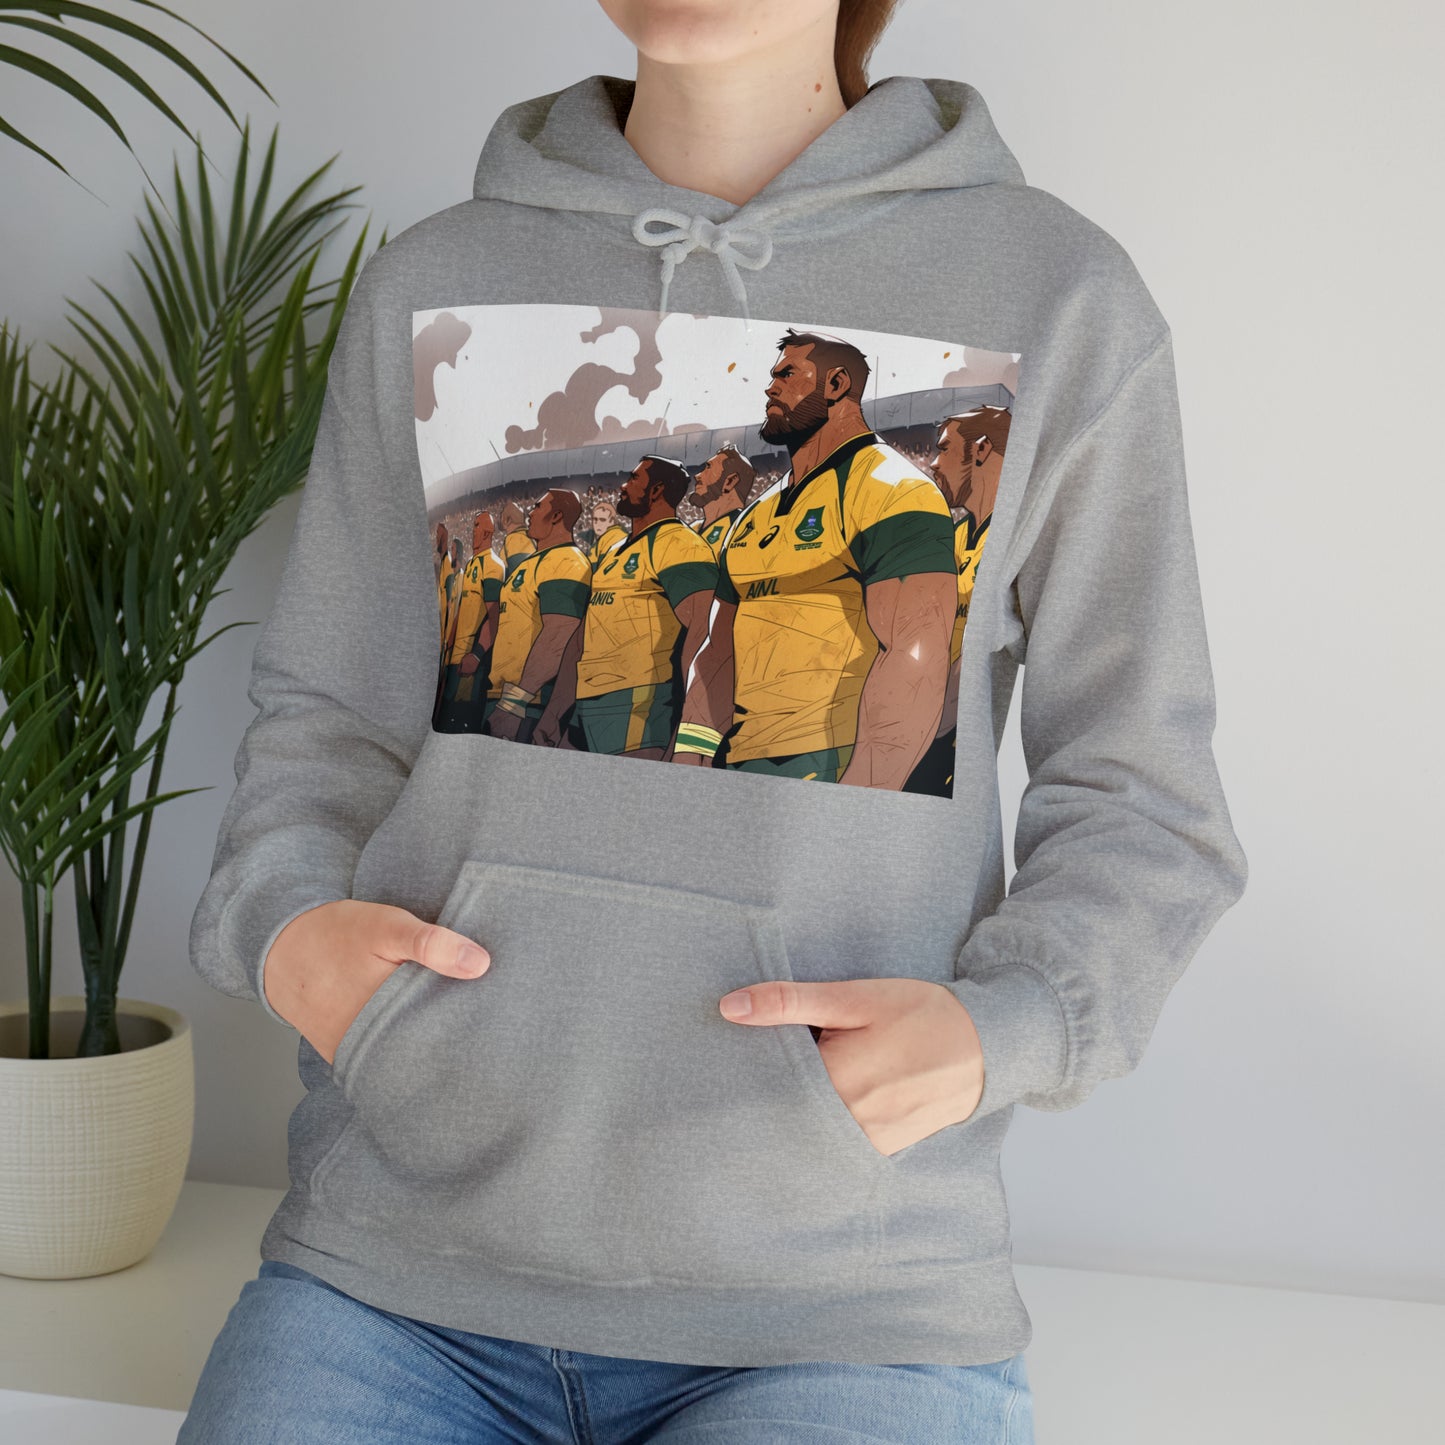 Ready Australia - light hoodies